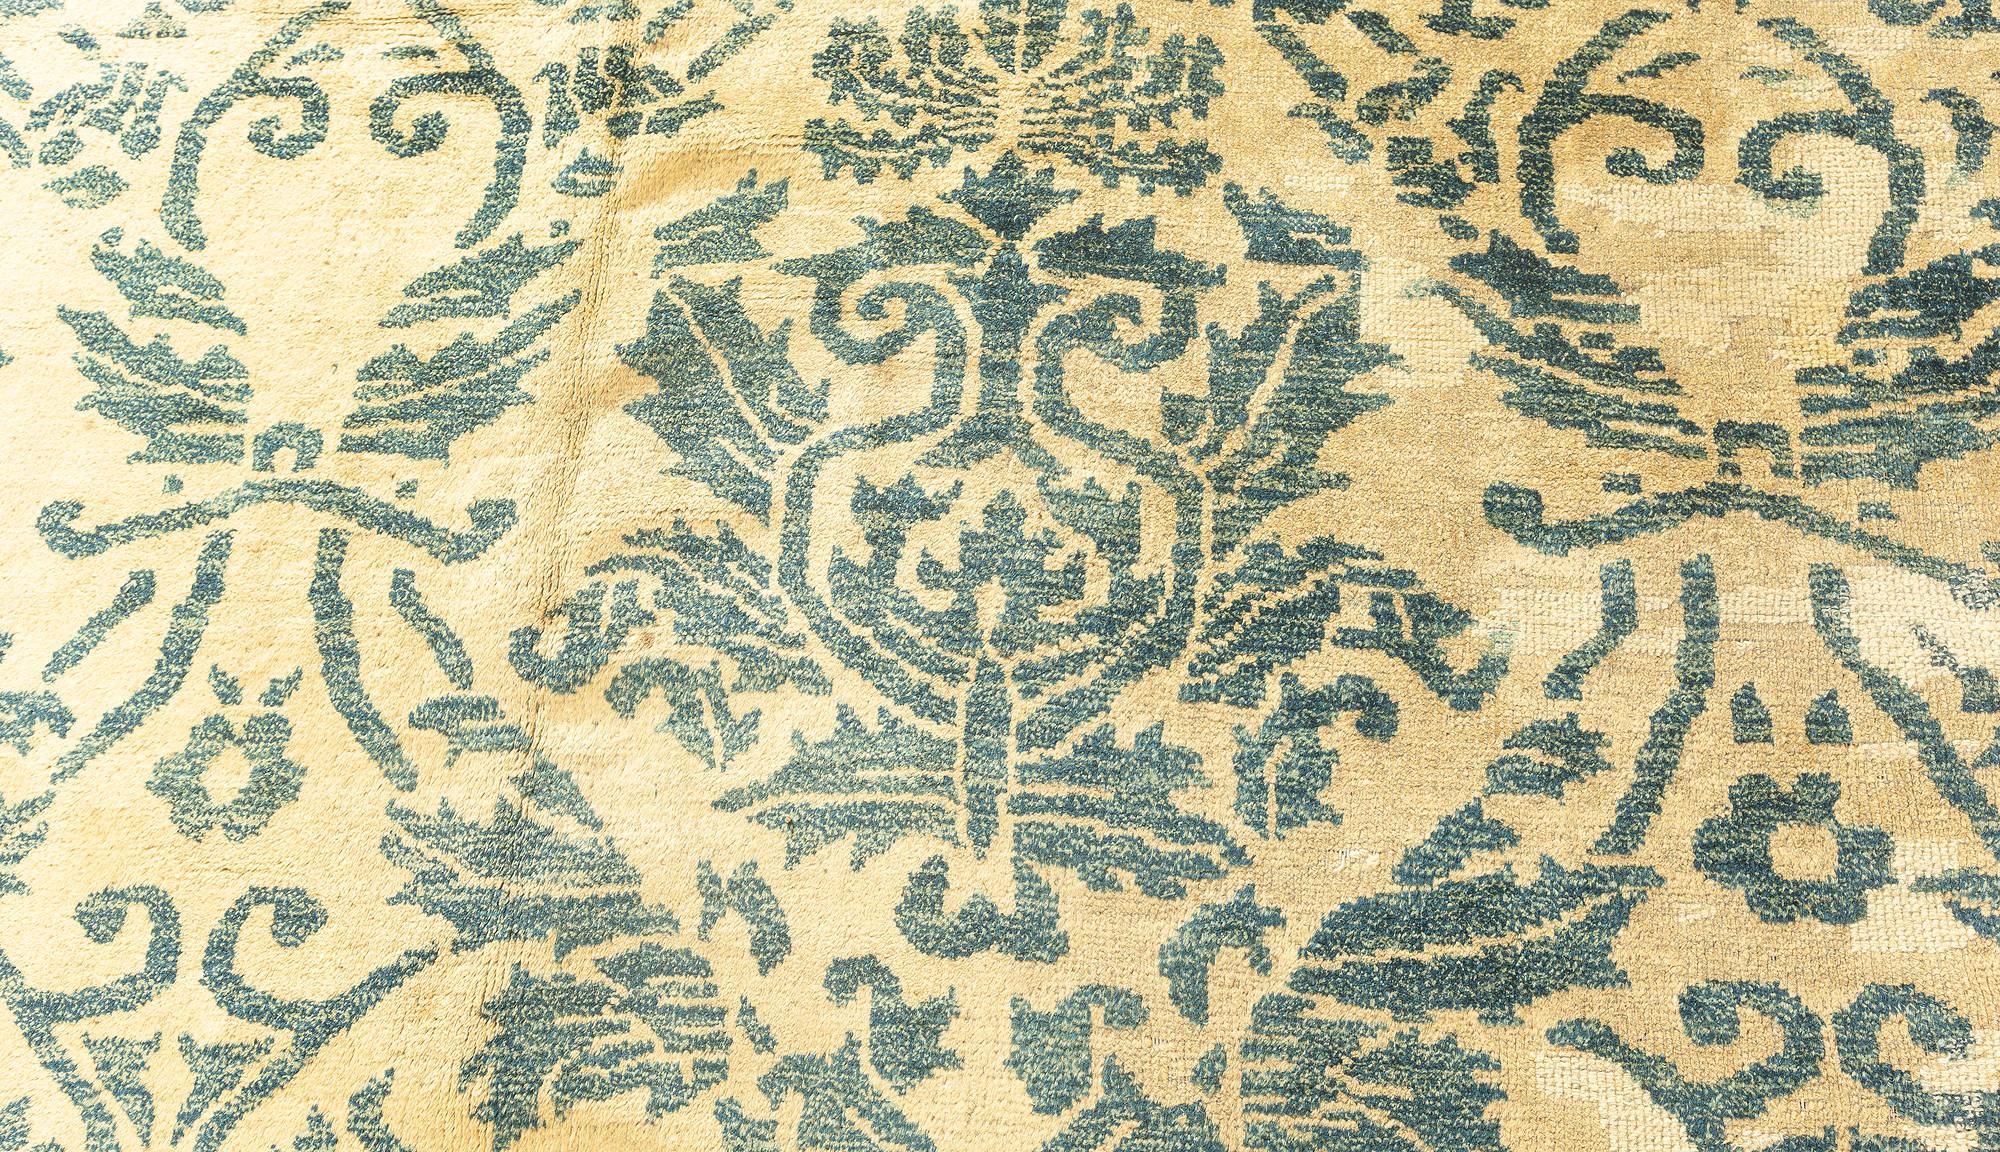 Vintage Chinese Art Deco handmade wool rug.
Size: 11'8